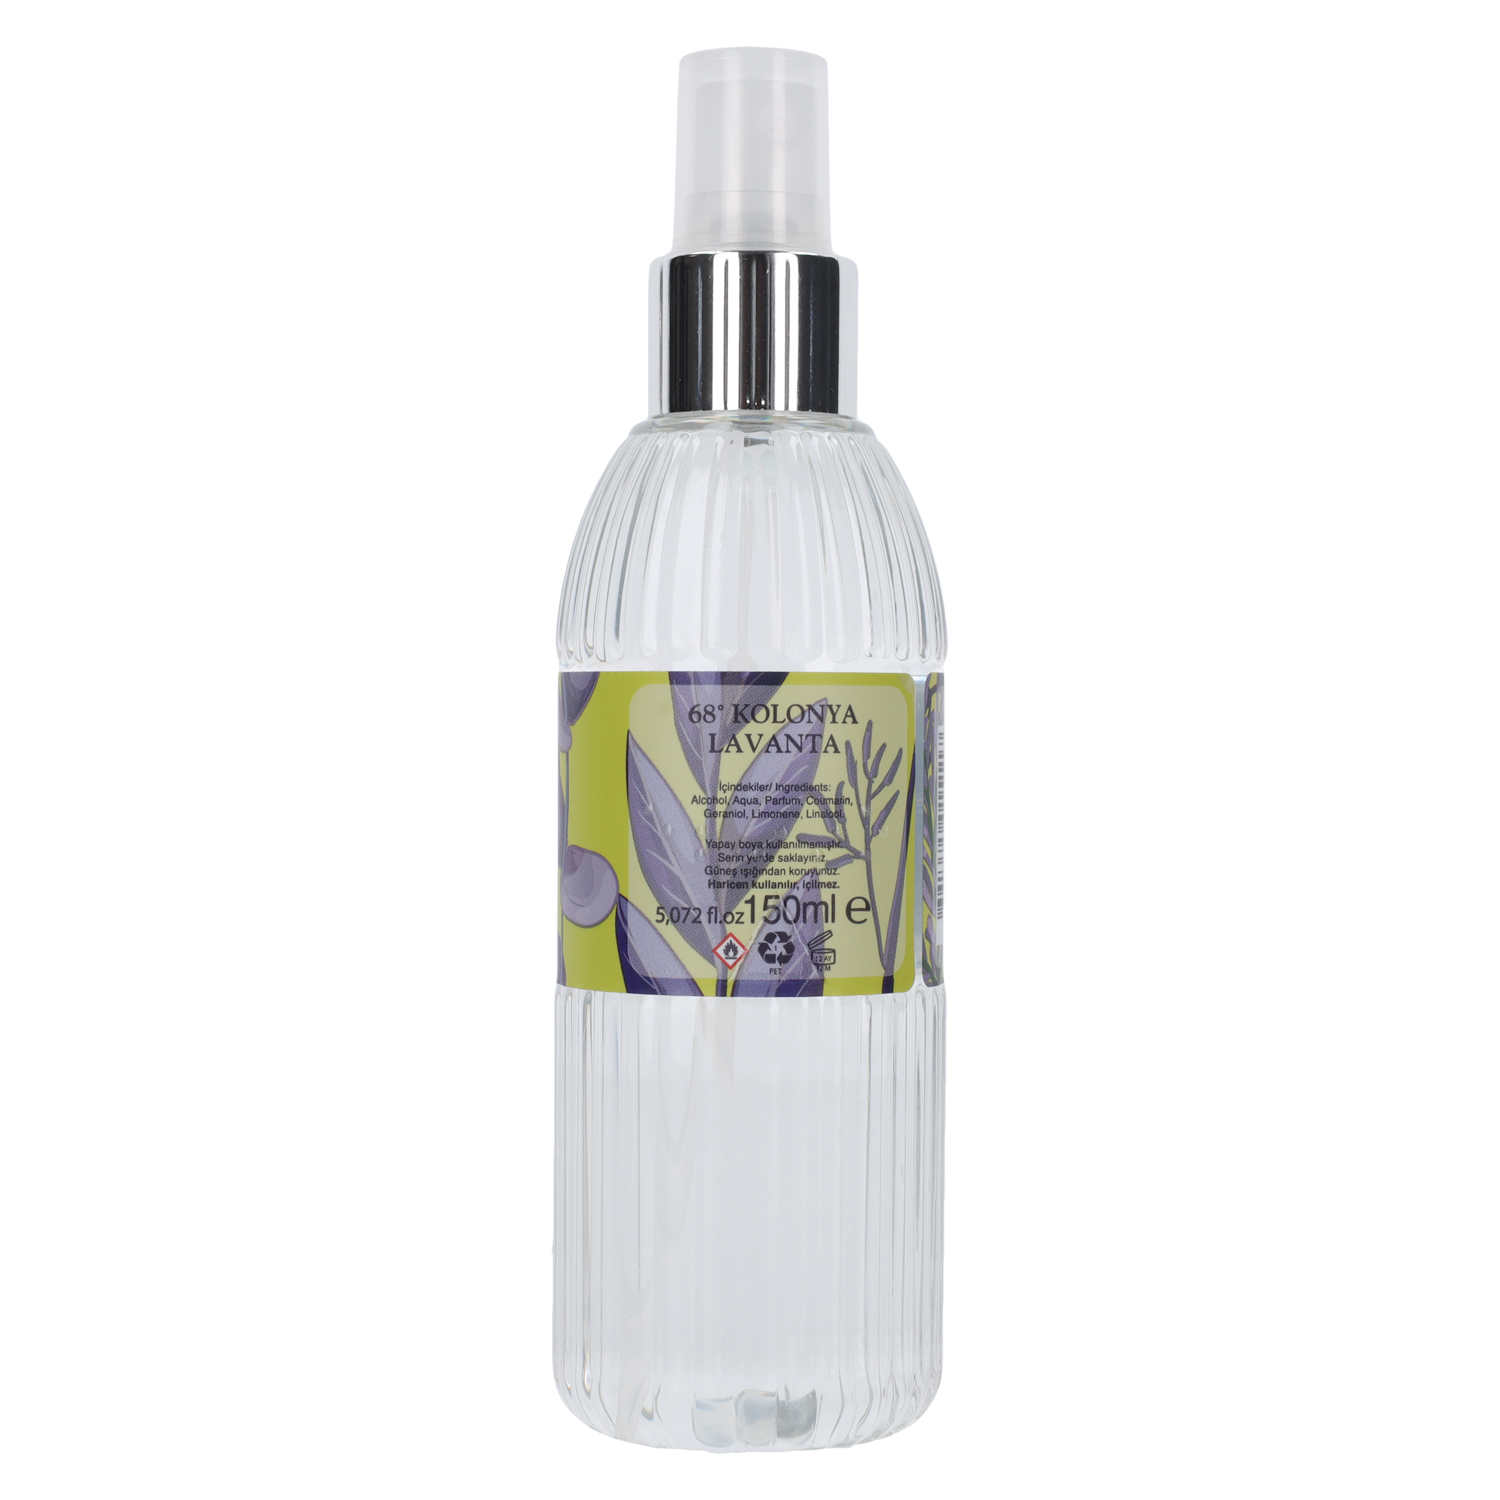 Kolonya Alacati Lavanta (Lavendar) fragrancy 150 ml Spray